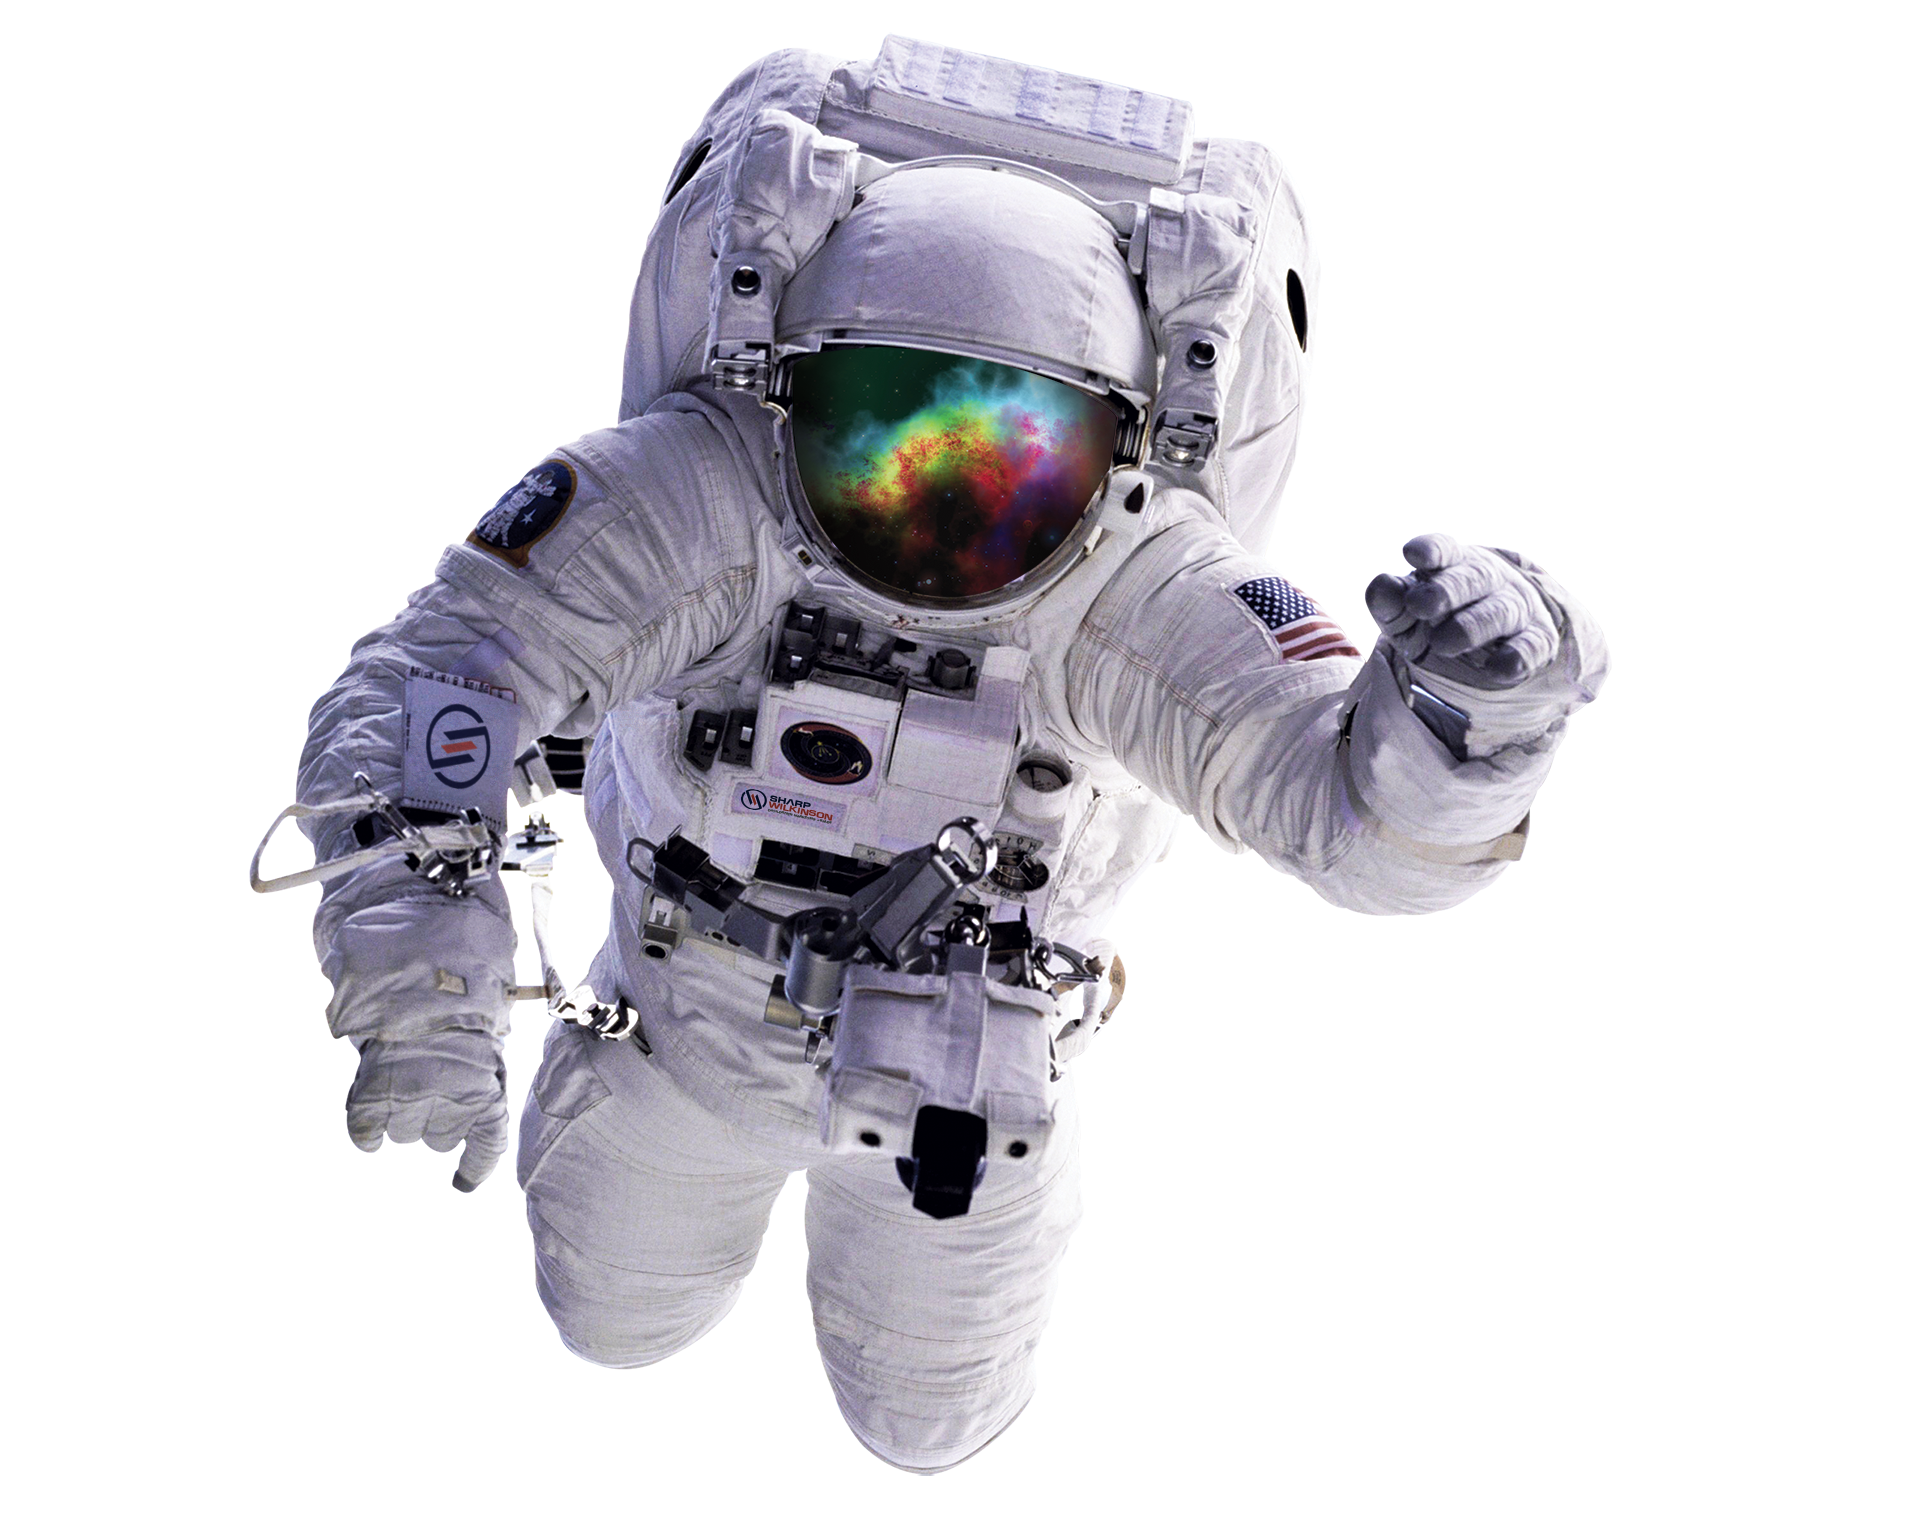 Astronaut floating